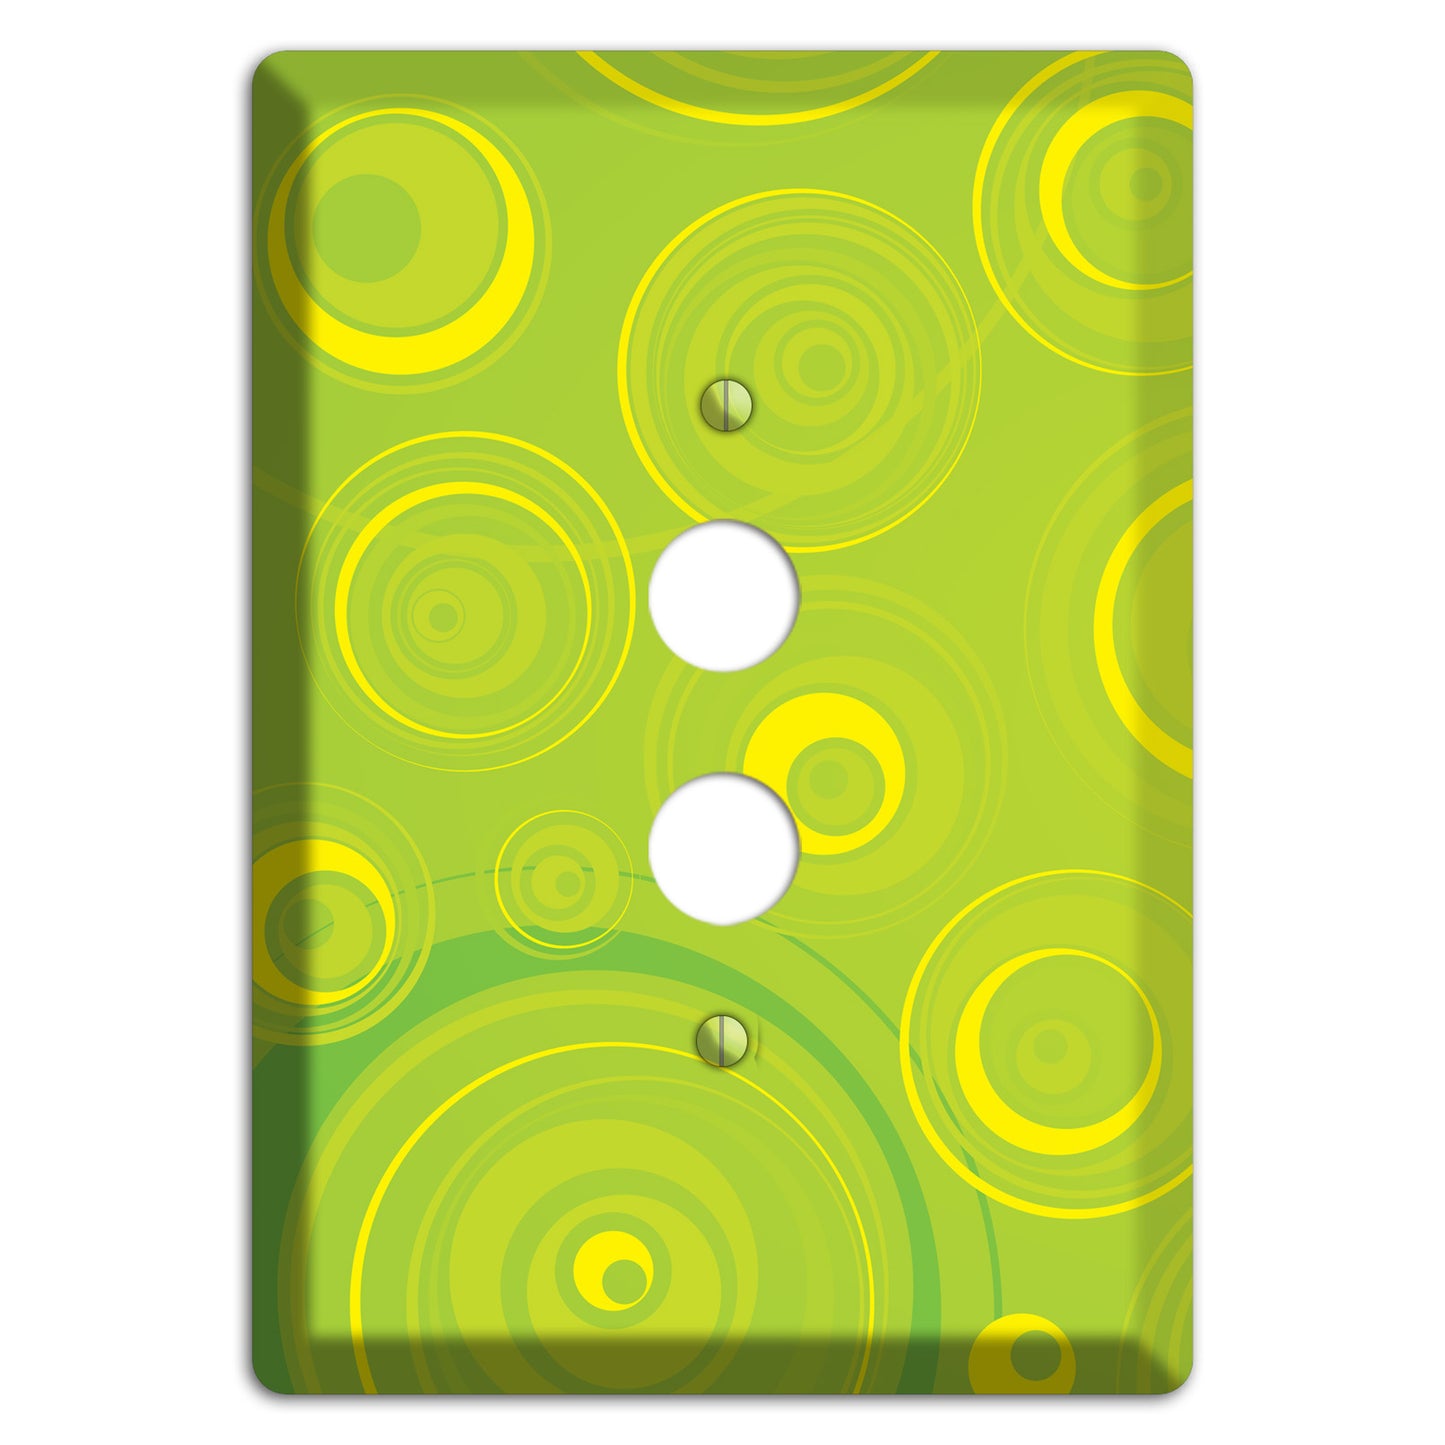 Green-yellow Circles 1 Pushbutton Wallplate